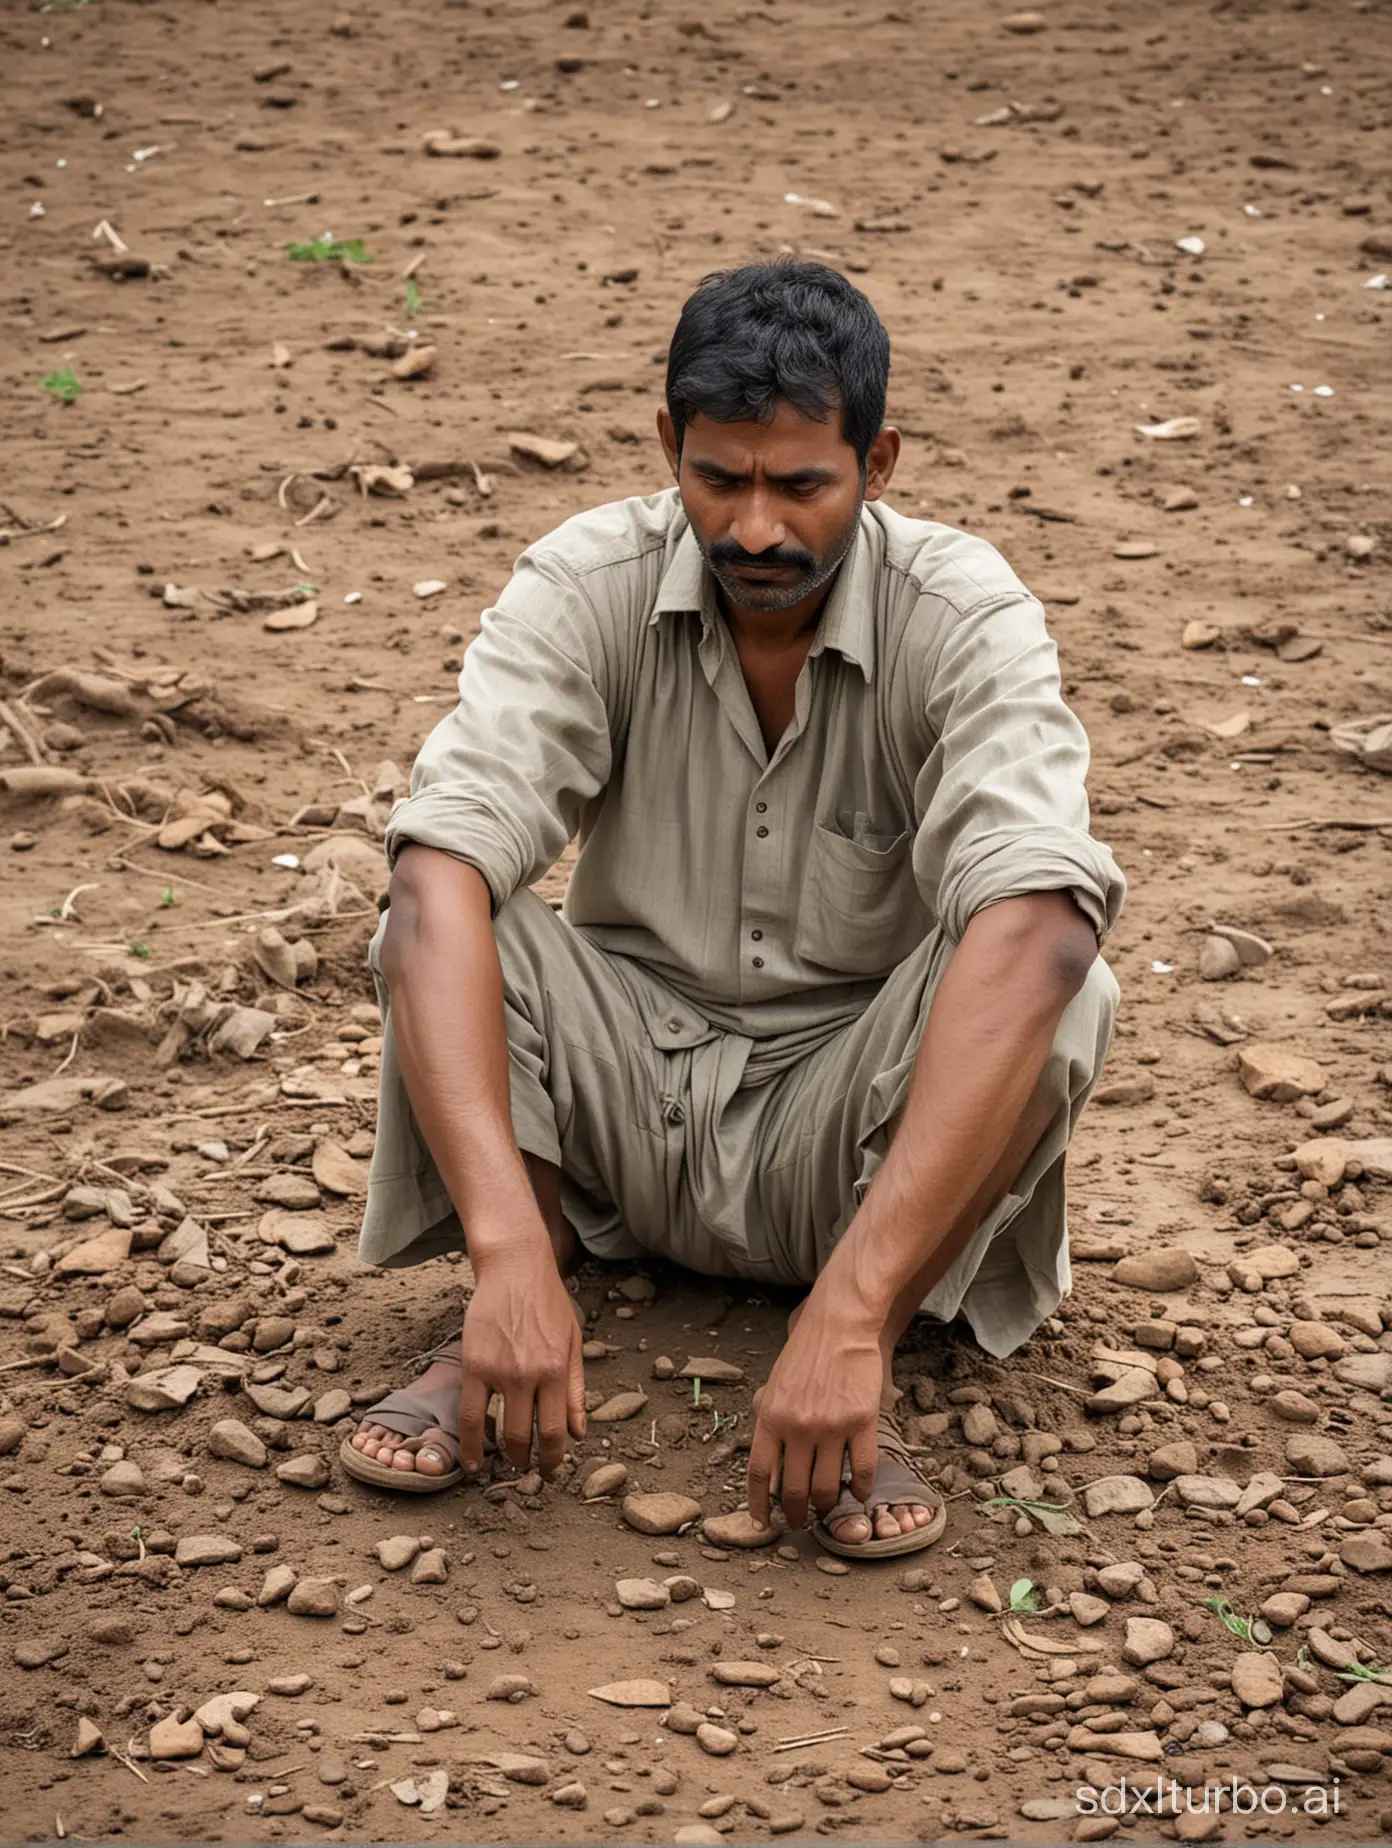 Indian farmer =sad sitting on ground